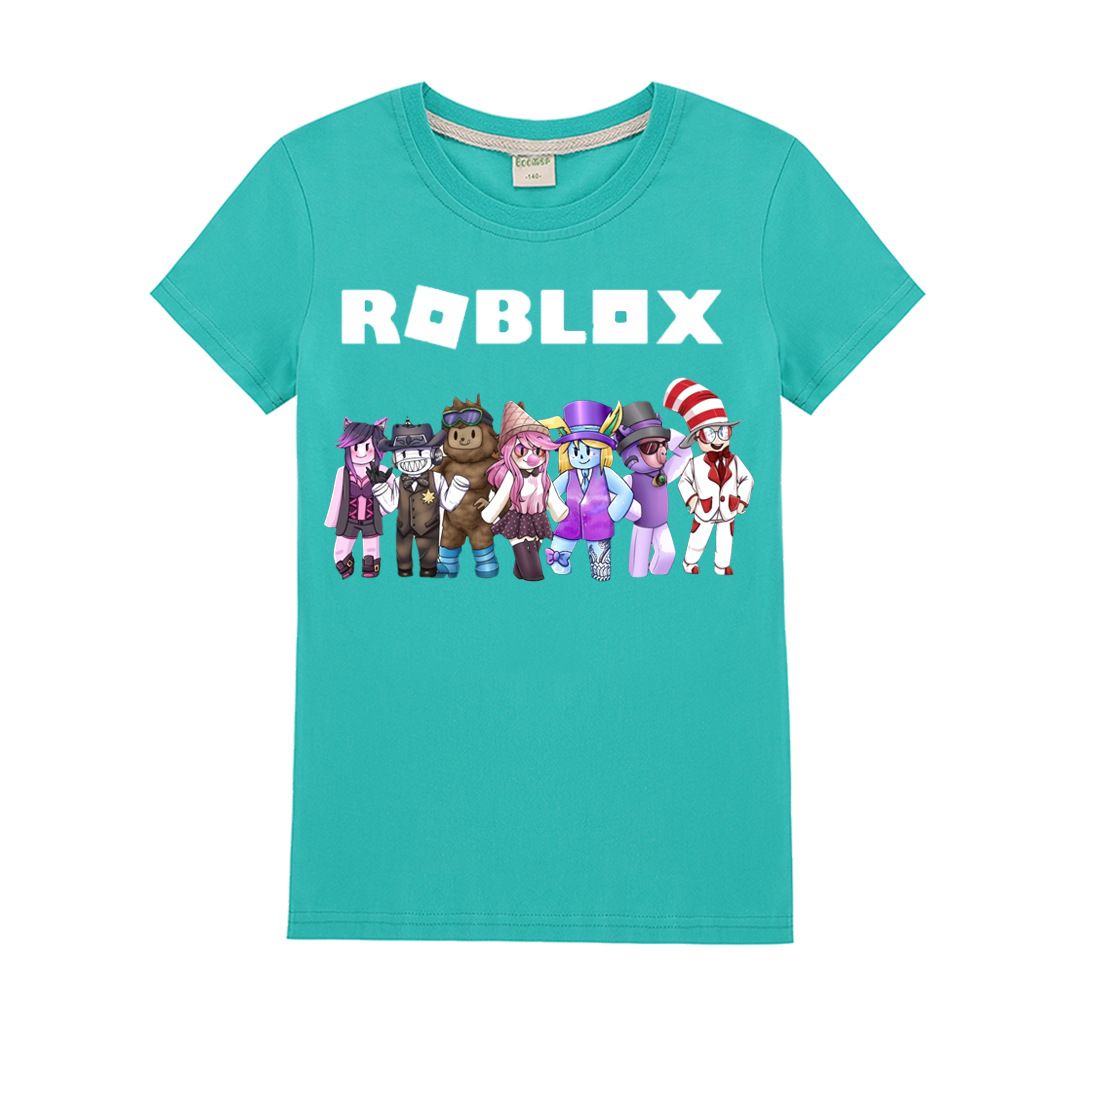 2020 Summer 2020 Roblox Tees Kids Designer Clothes Boys Teenage Girls Clothing Cotton Short Sleeve Girls Shirt T Shirt From Baby0512 13 77 Dhgate Com - t shirt roblox girls